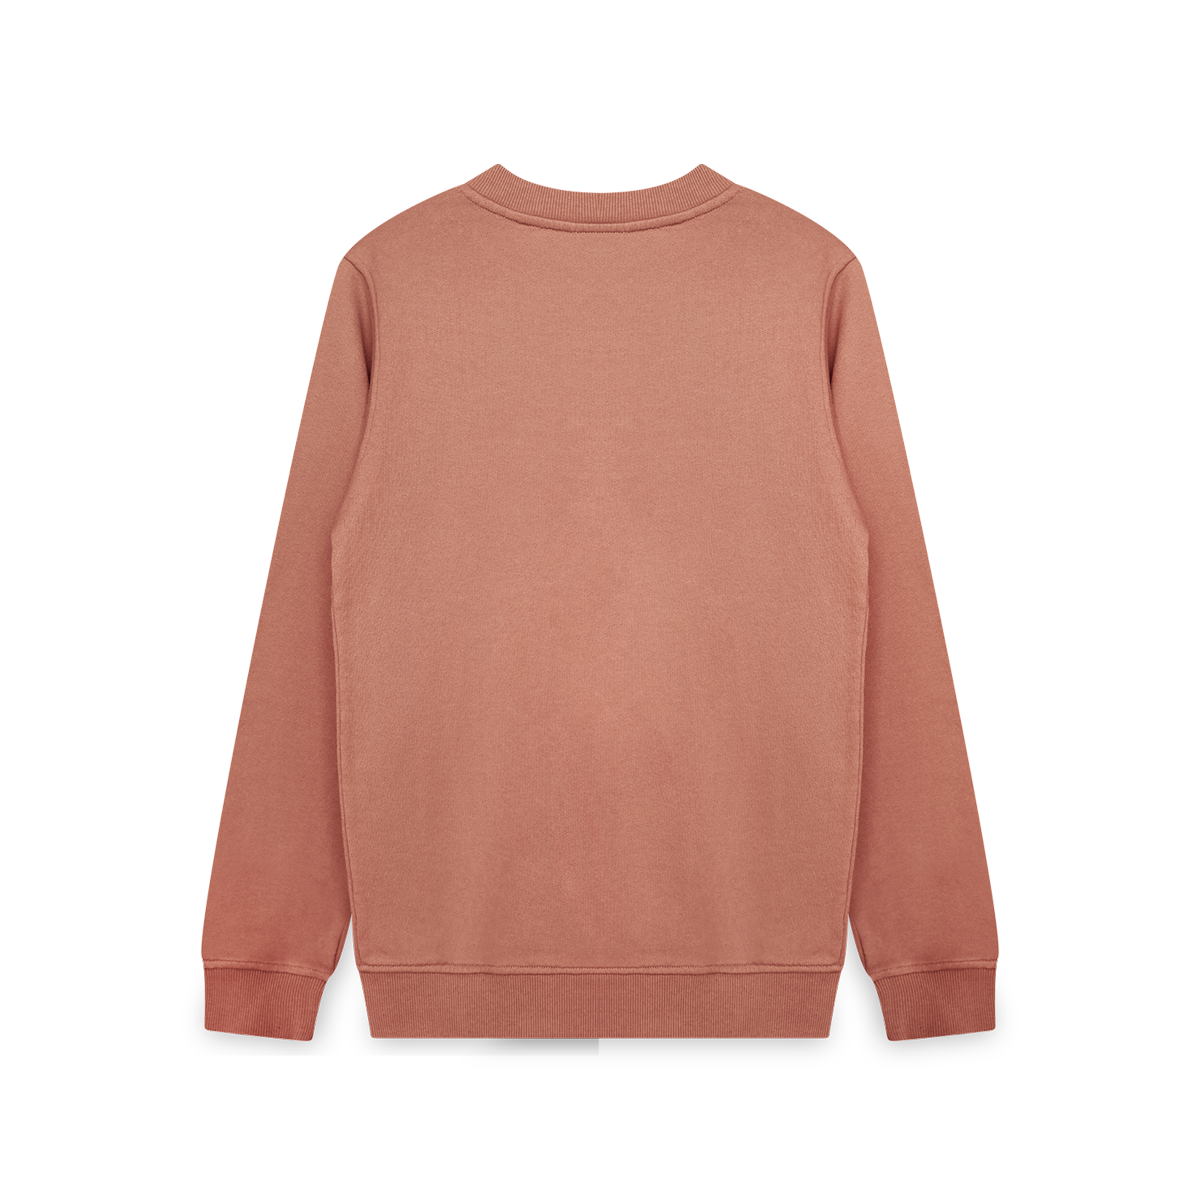 717 Sweater Retro Pink